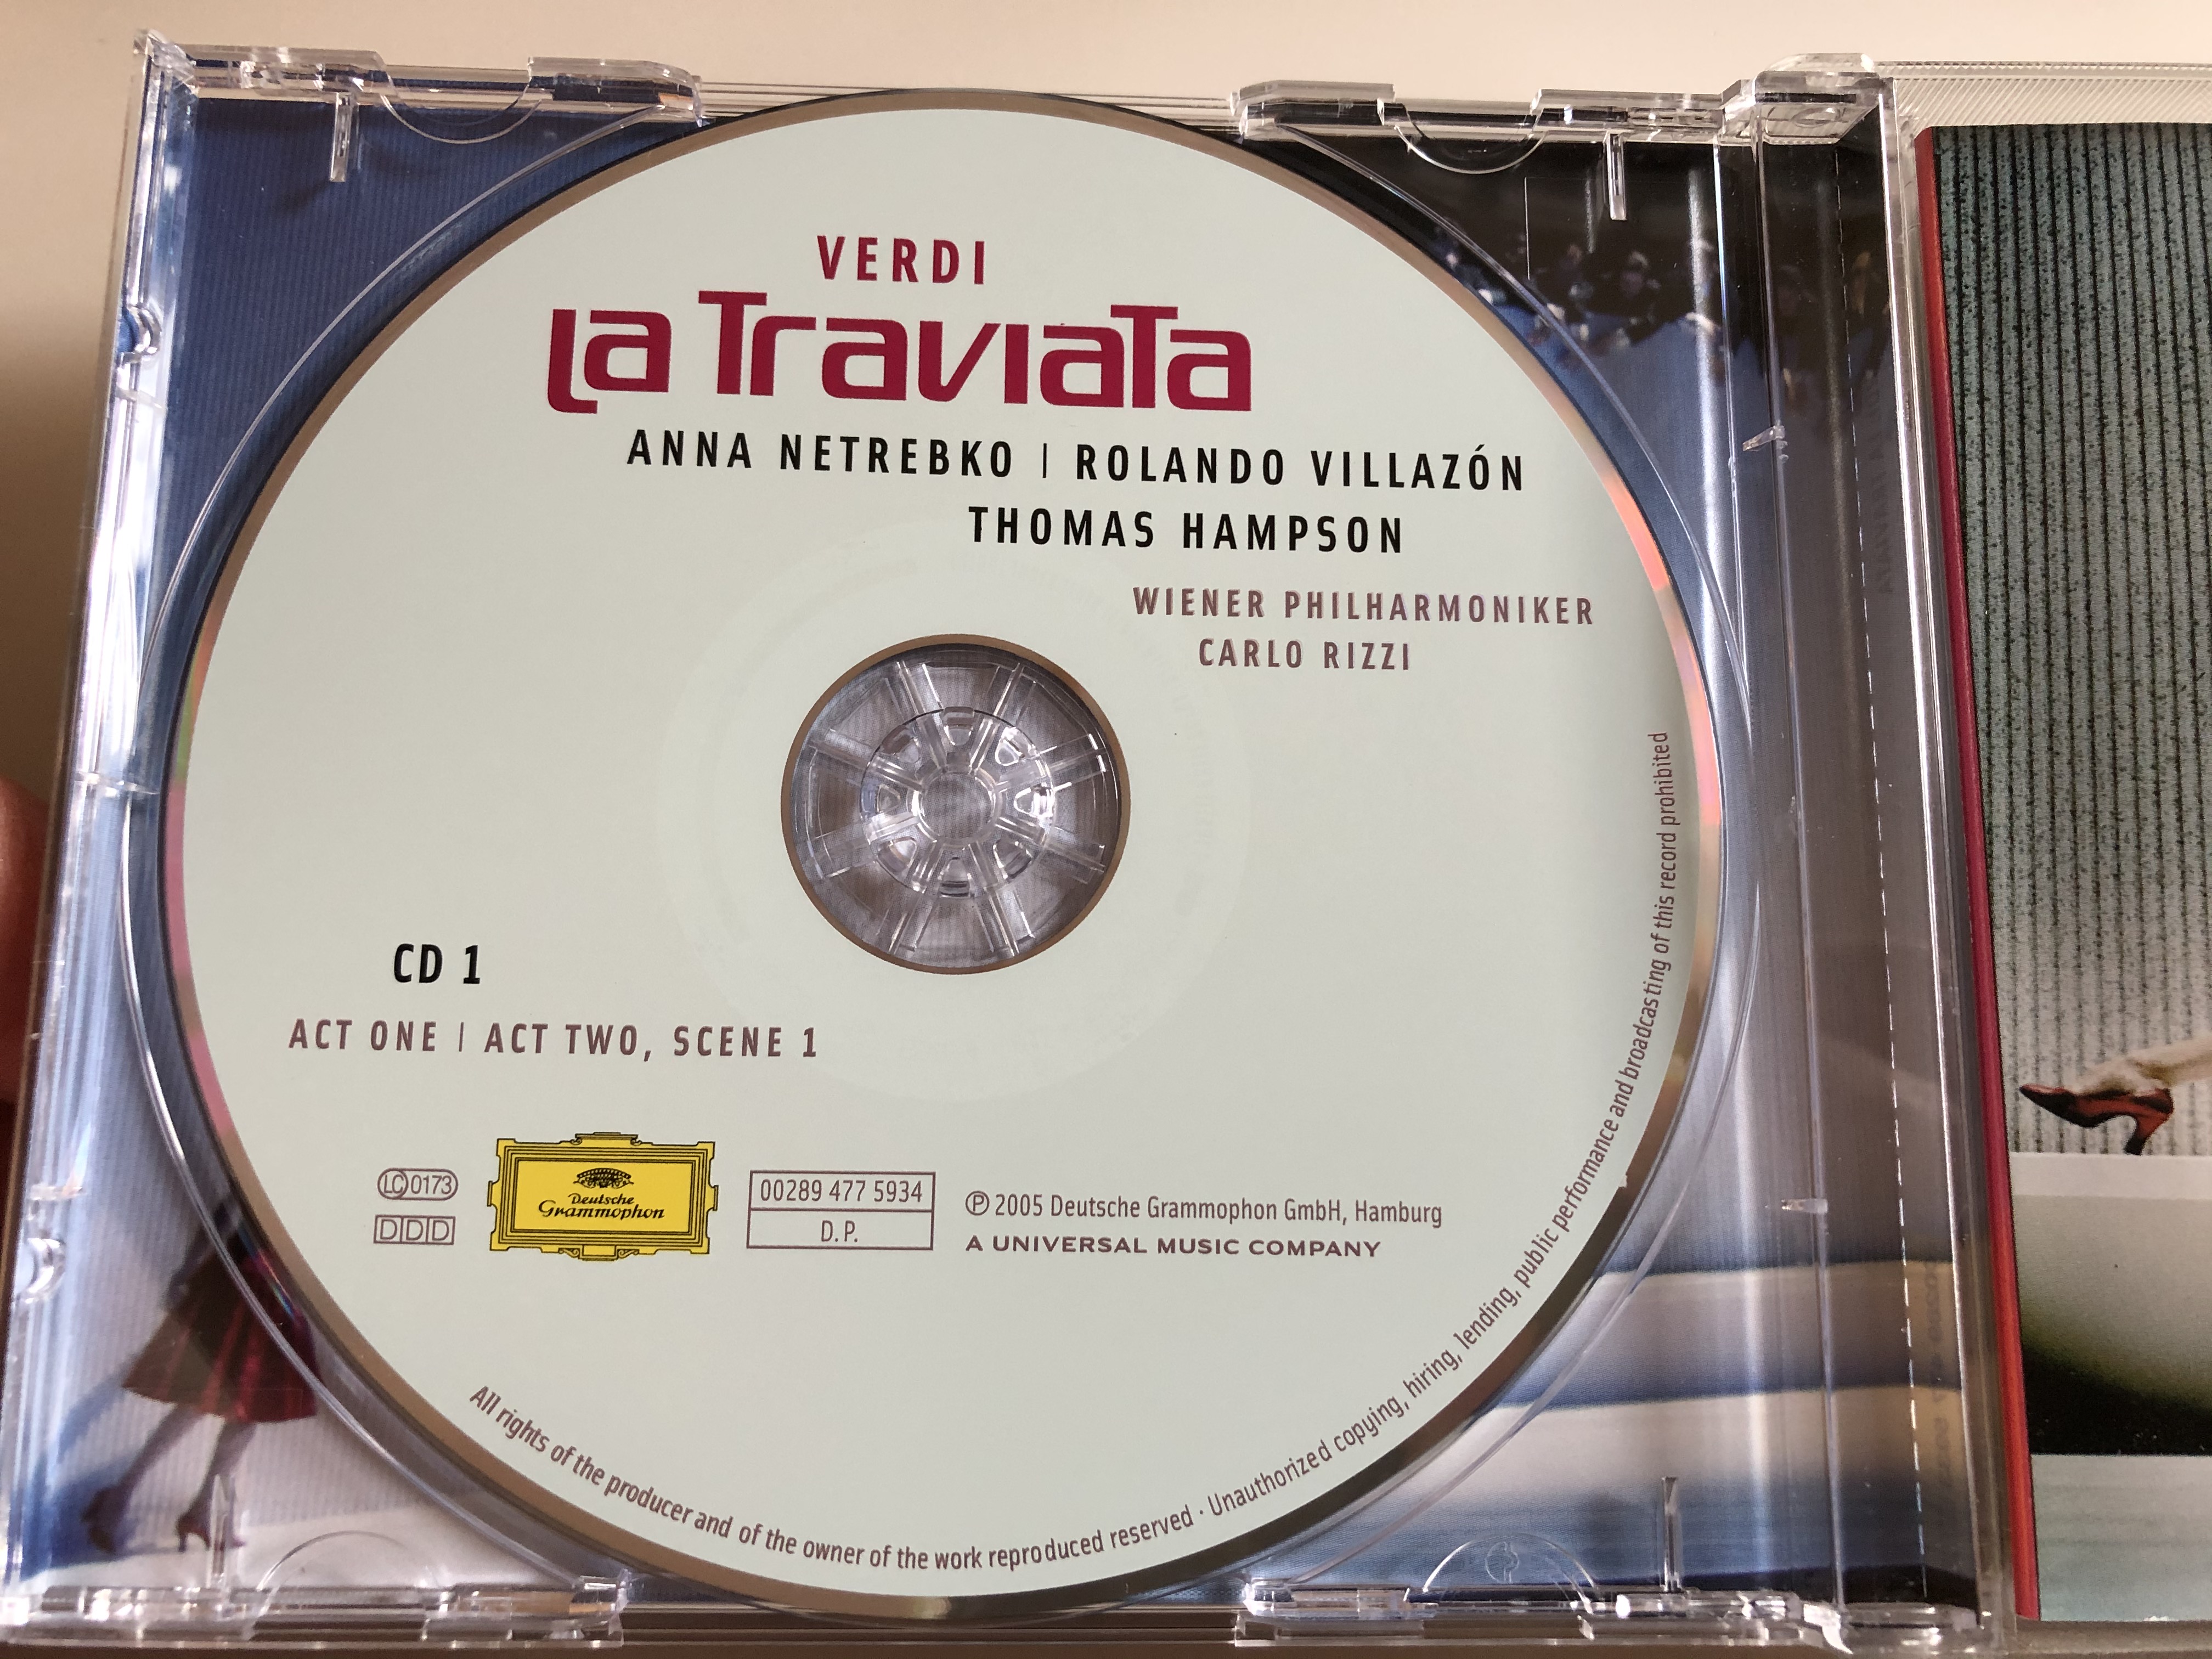 verdi-la-traviata-anna-netrebko-rolando-villaz-n-thomas-hampson-wiener-philharmoniker-carlo-rizzi-deutsche-grammophon-2x-audio-cd-2005-00289-477-5933-2-.jpg